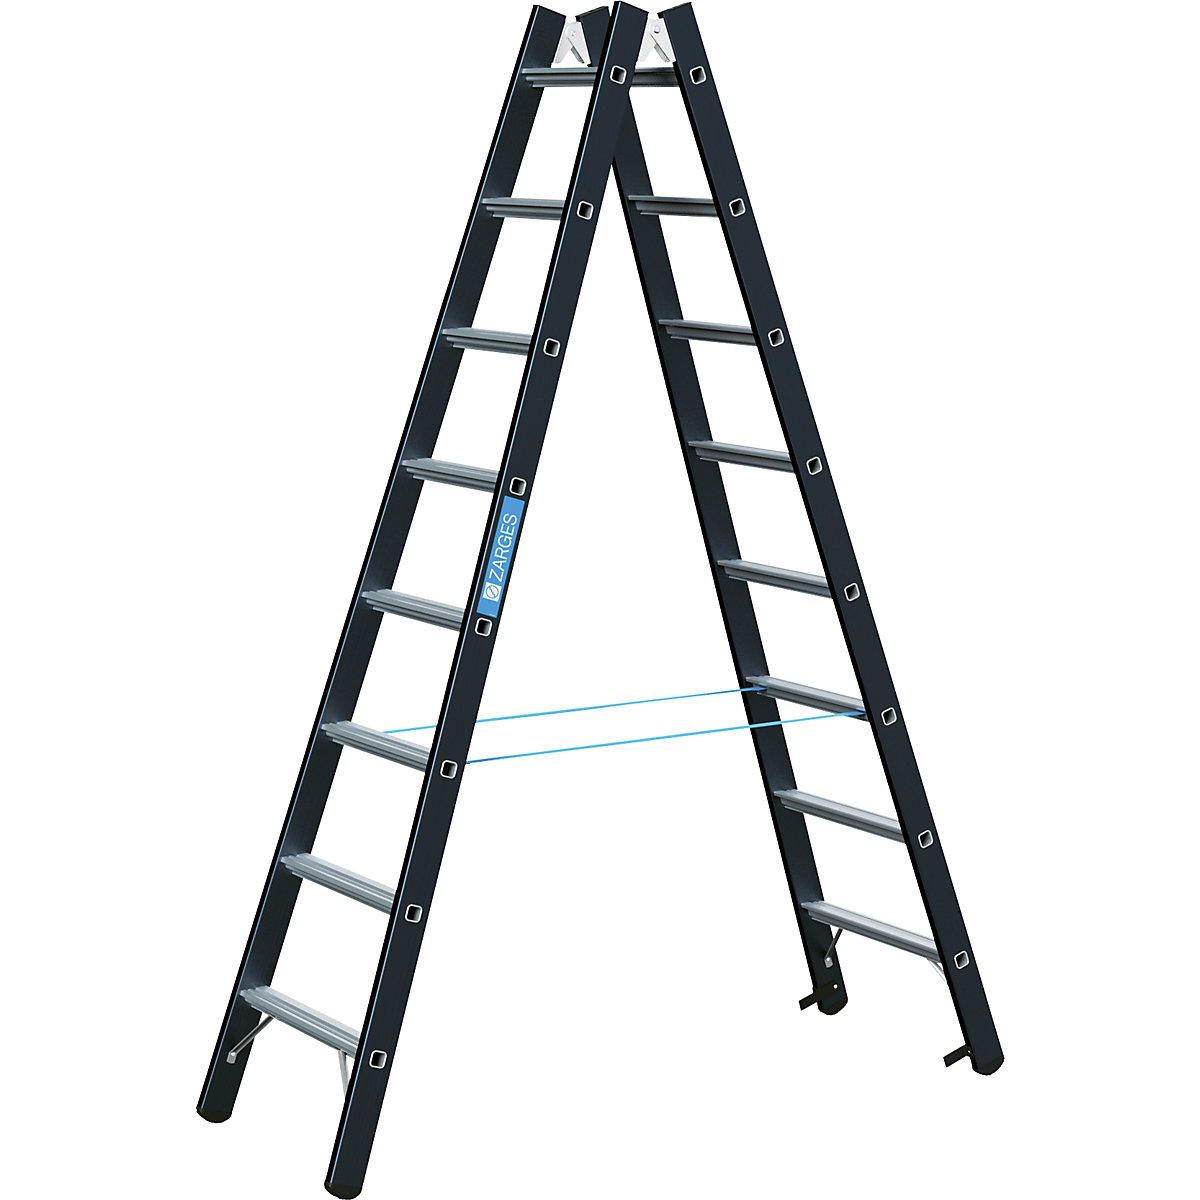 Escada dupla para cargas pesadas – ZARGES, subida dos dois lados, 2 x 8 degraus-5